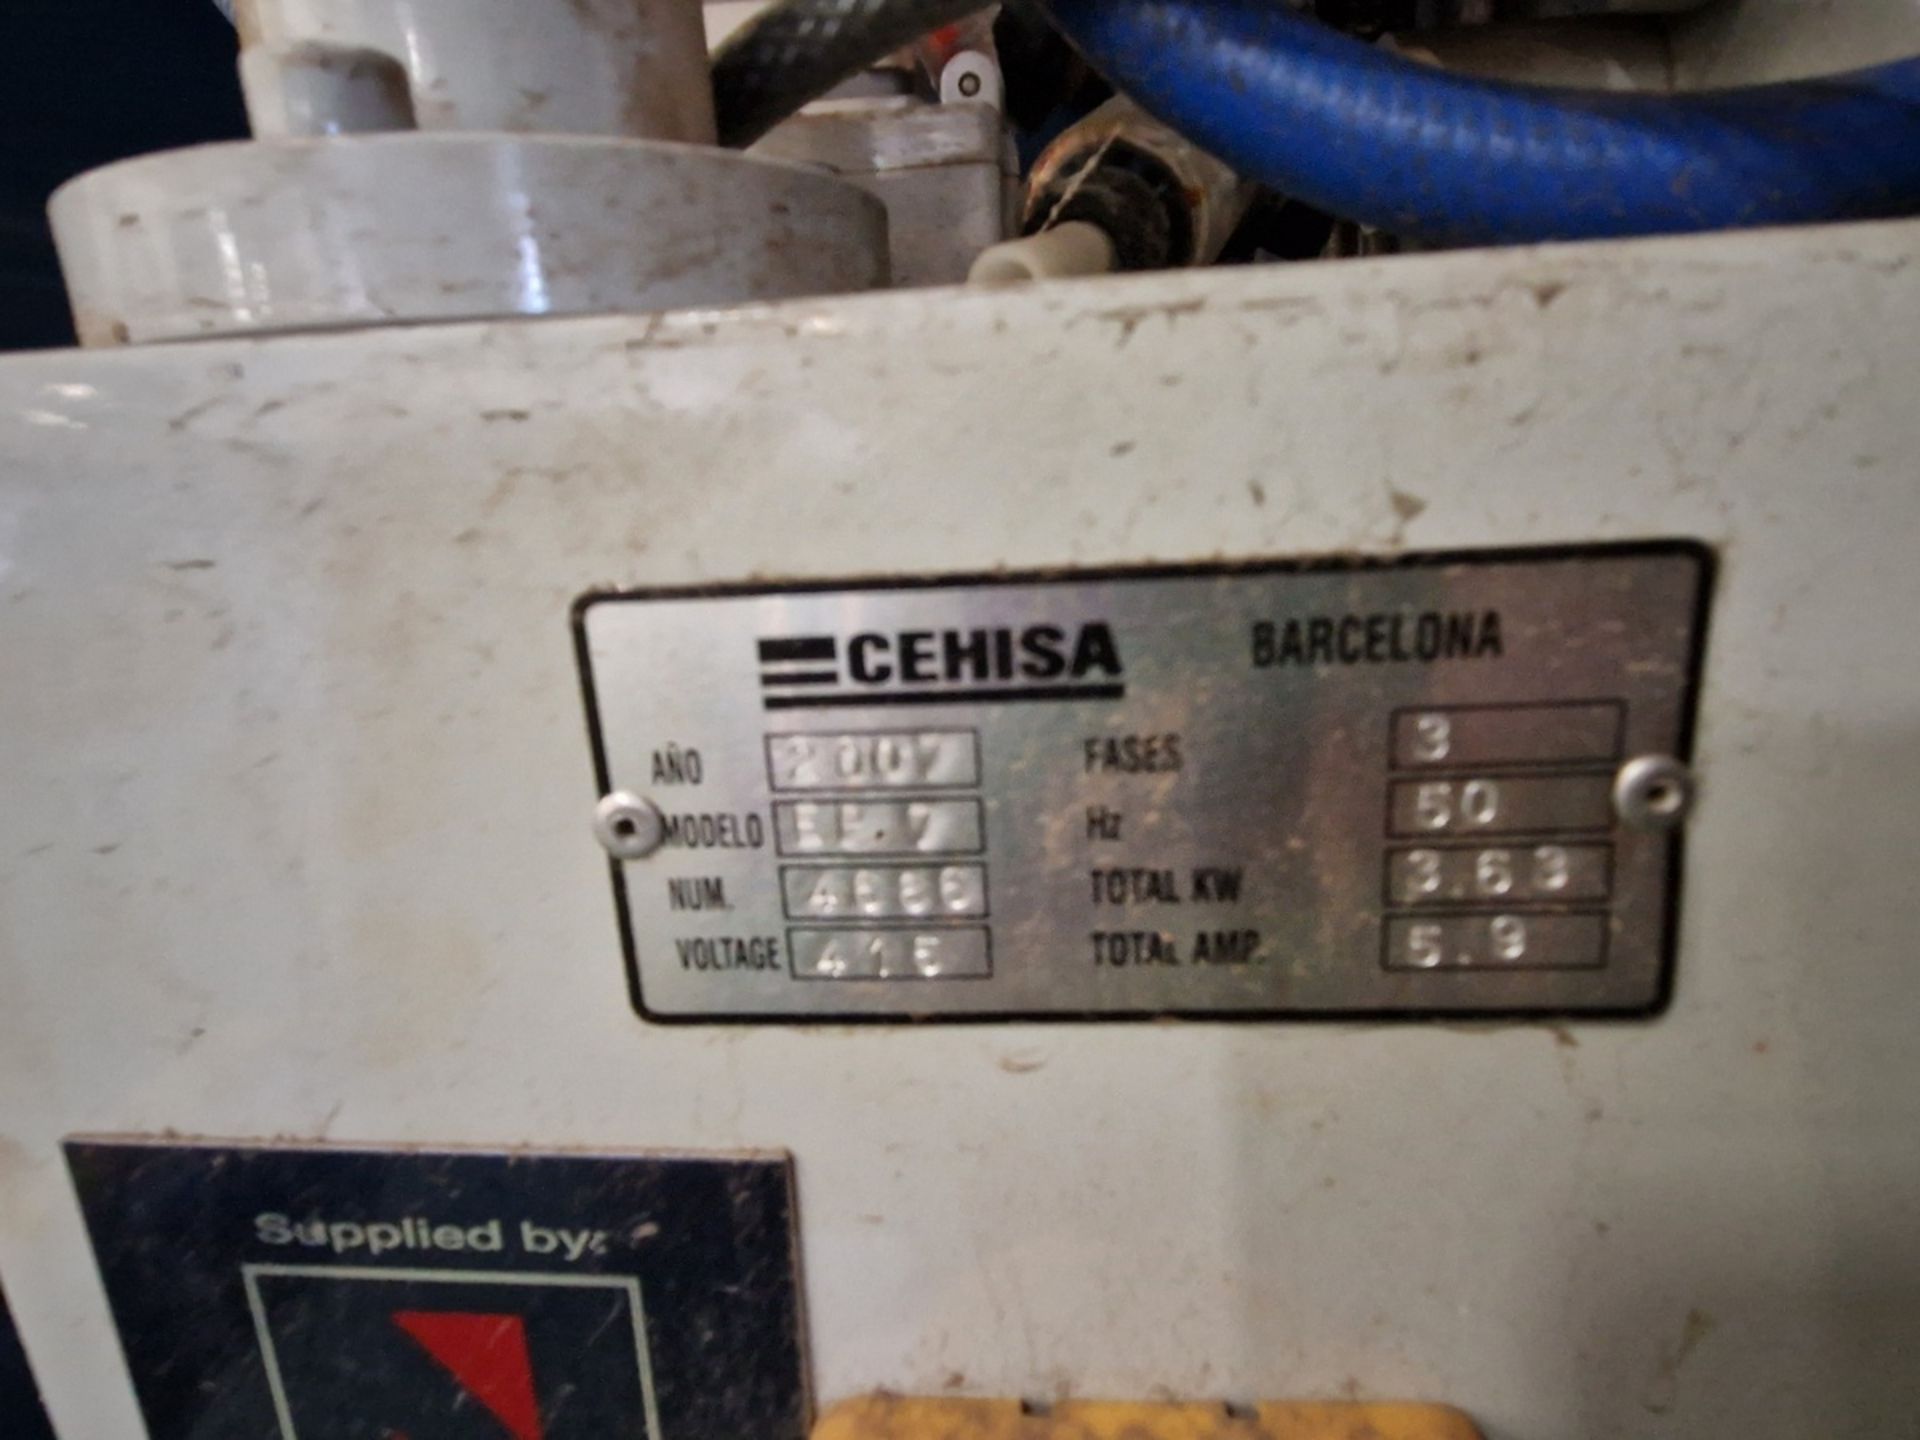 Cehisa Rapid EP-7 edgebanding machine - YOM 2007 - serial 4686 - 415V - 3 phase - 3.63kW - 5.9A - Image 14 of 14